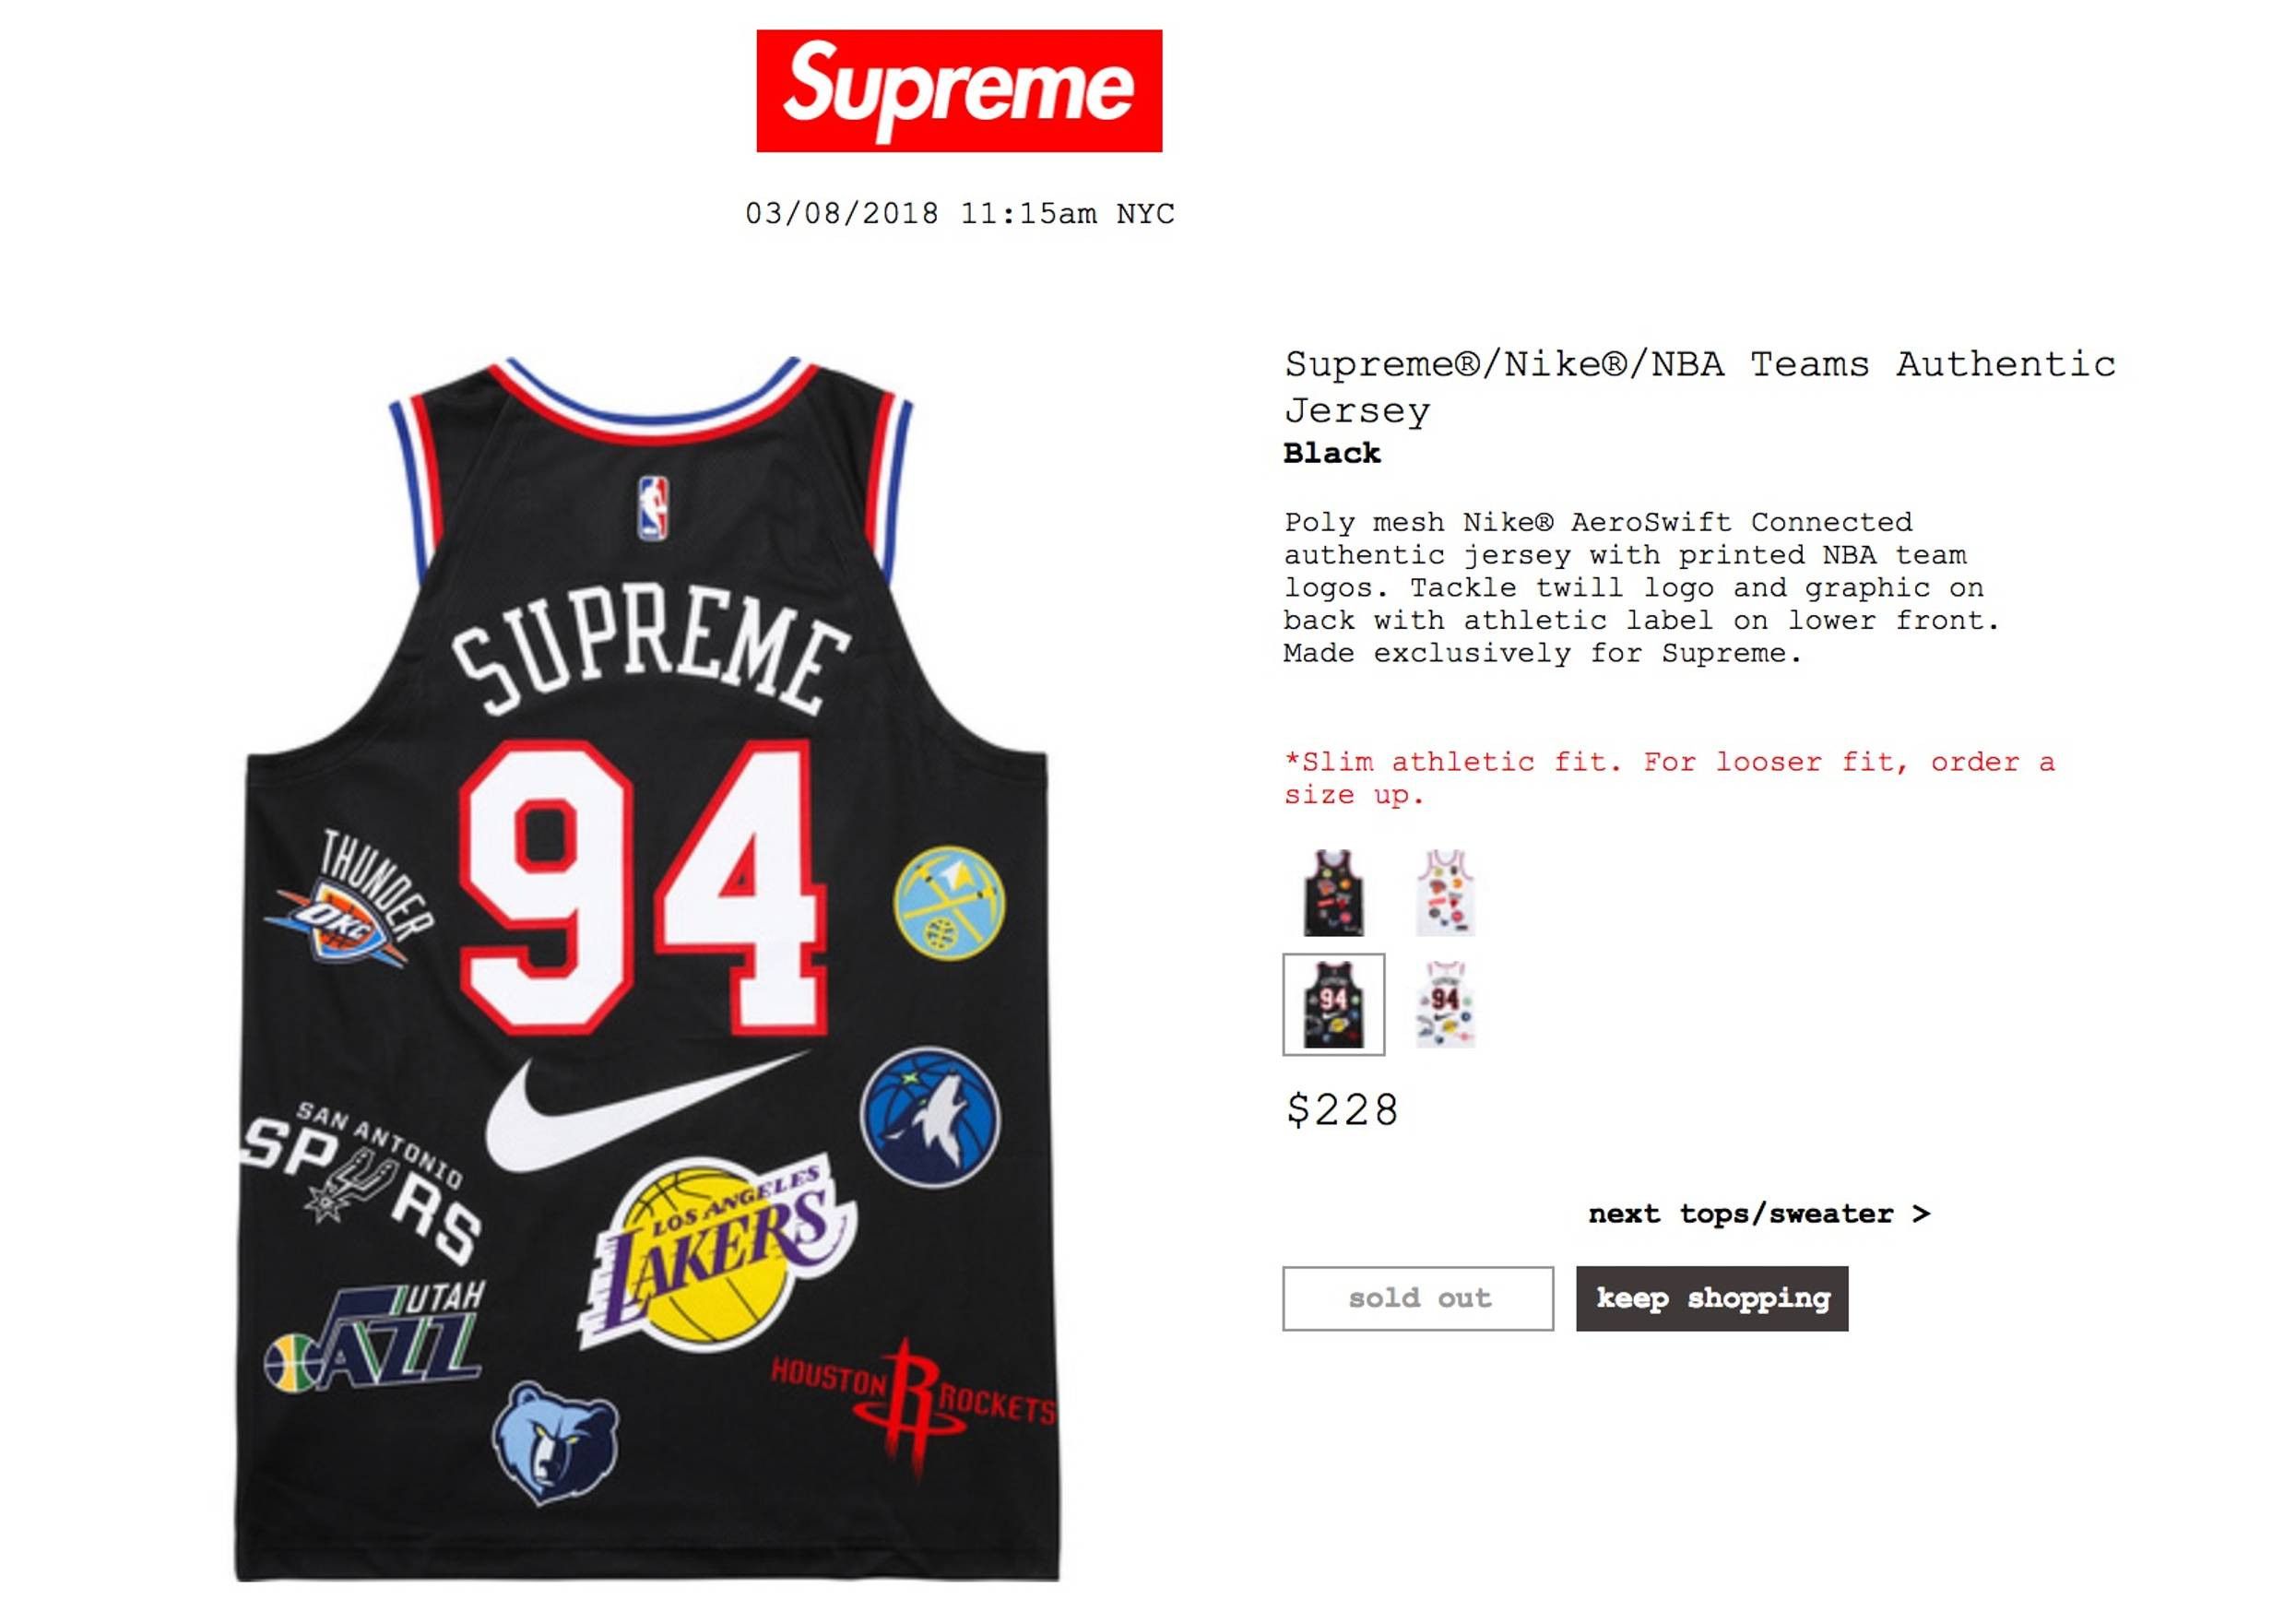 Supreme Supreme/Nike/NBA Teams authentic Jersey black | Grailed